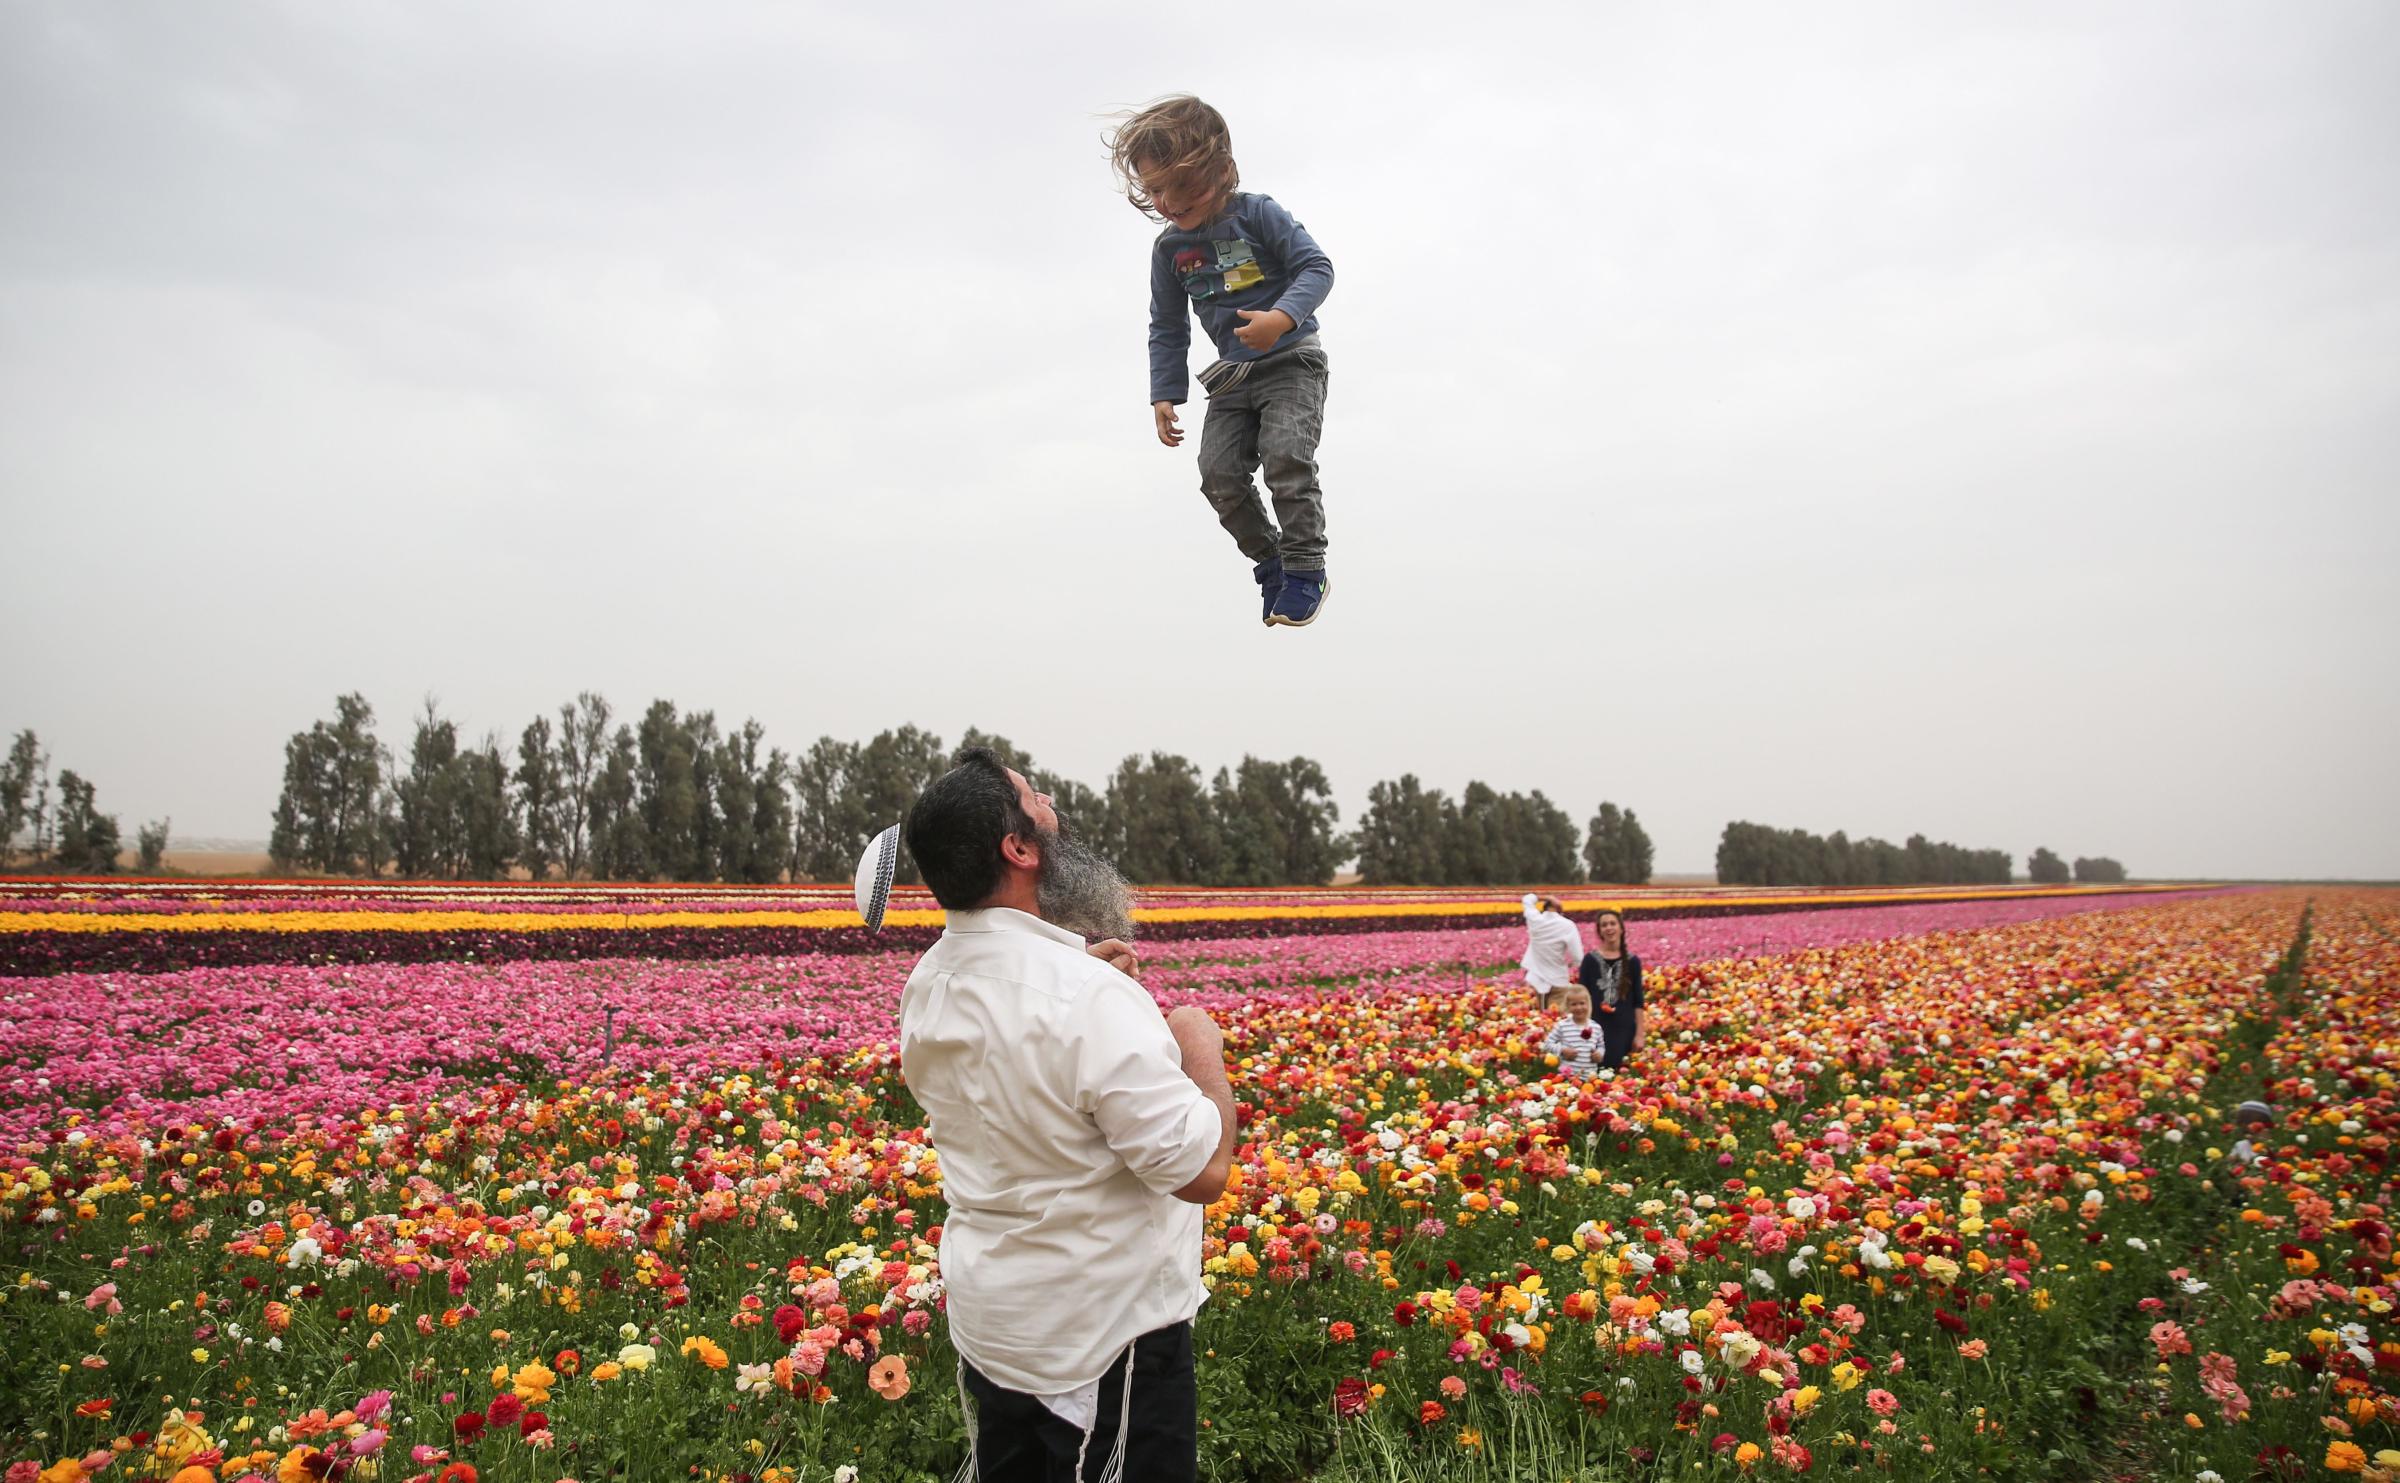 An Israeli man playfully throws a child as his kippah falls off in a field of Ranunculus flowers in the southern Israeli Kibbutz of Nir Yitzhak, located along the Israeli-Gaza Strip border on April 12, 2017.